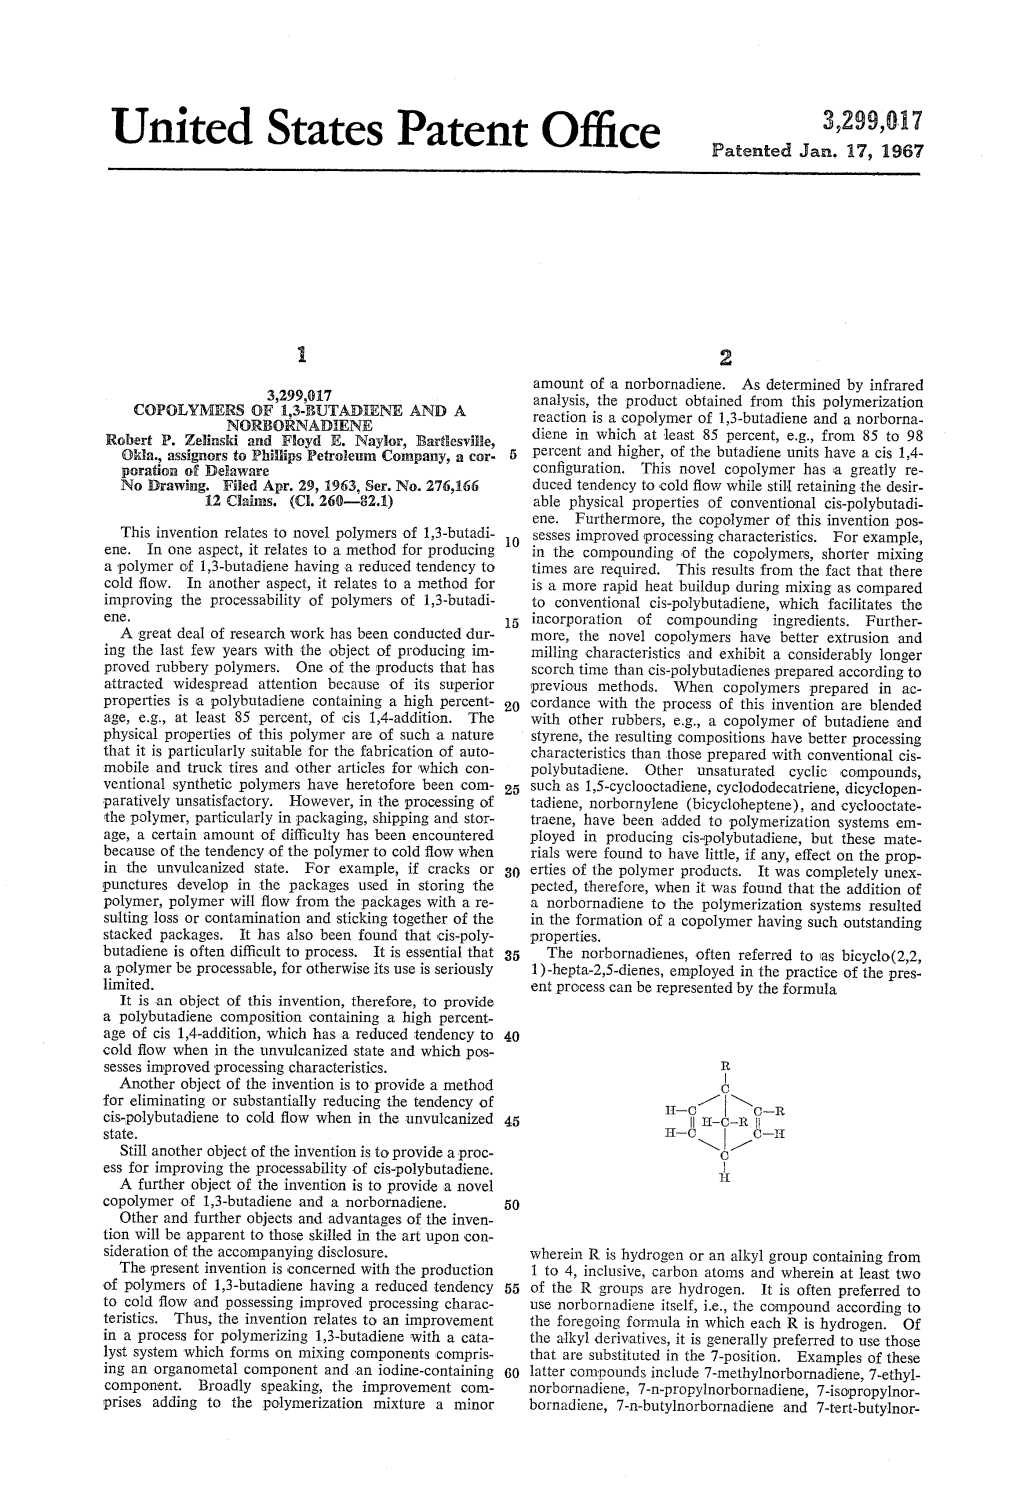 United States Patent 0 " IC€ Patented Jan